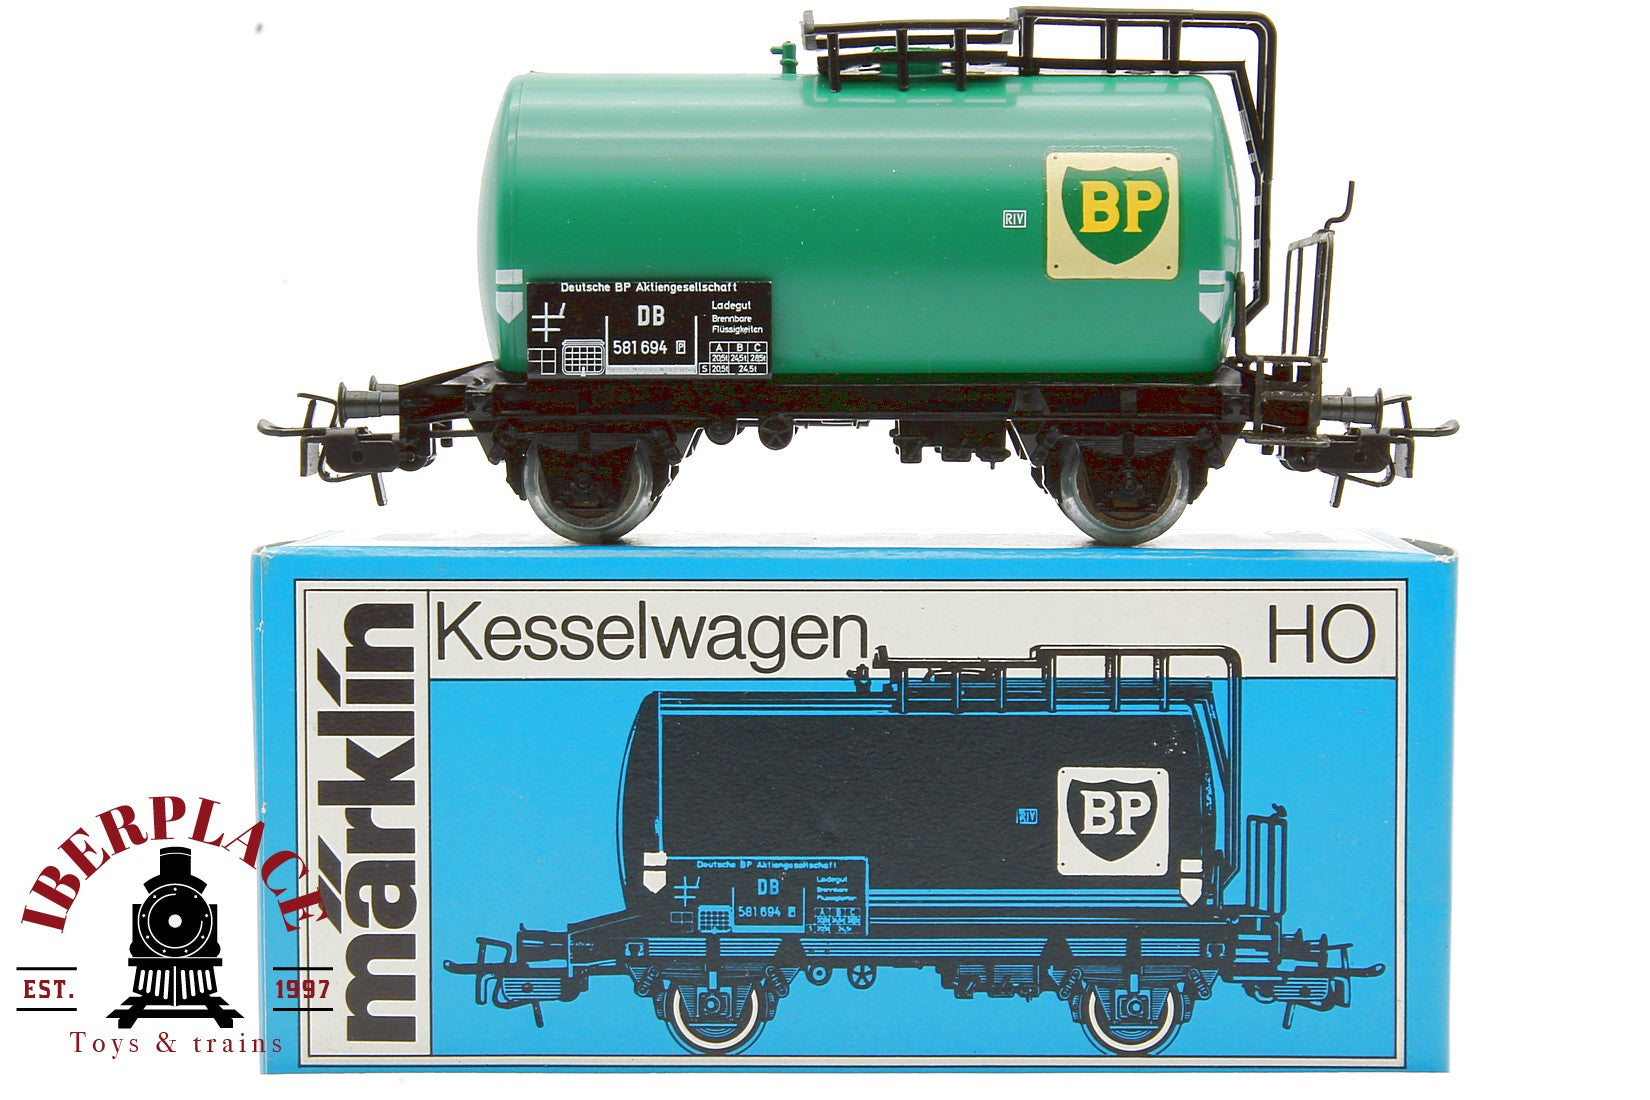 Märklin 4644 vagón mercancías BP DB 581 694 H0 escala 1:87 ho 00